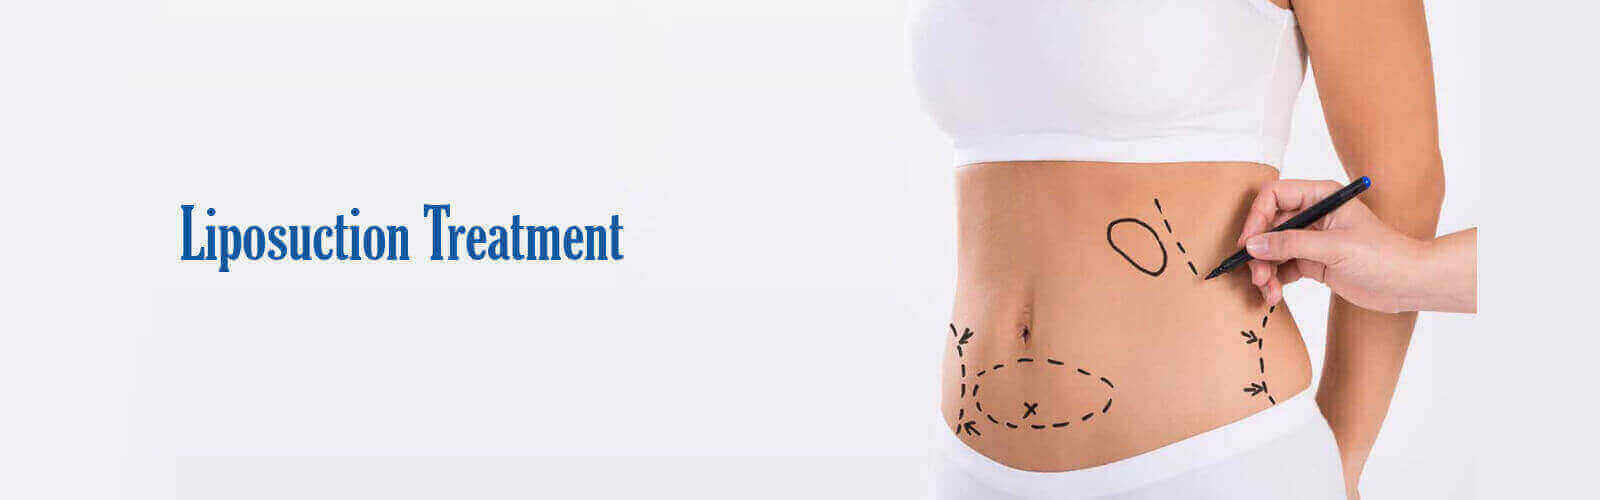 Liposuction Treatment in Malaysia